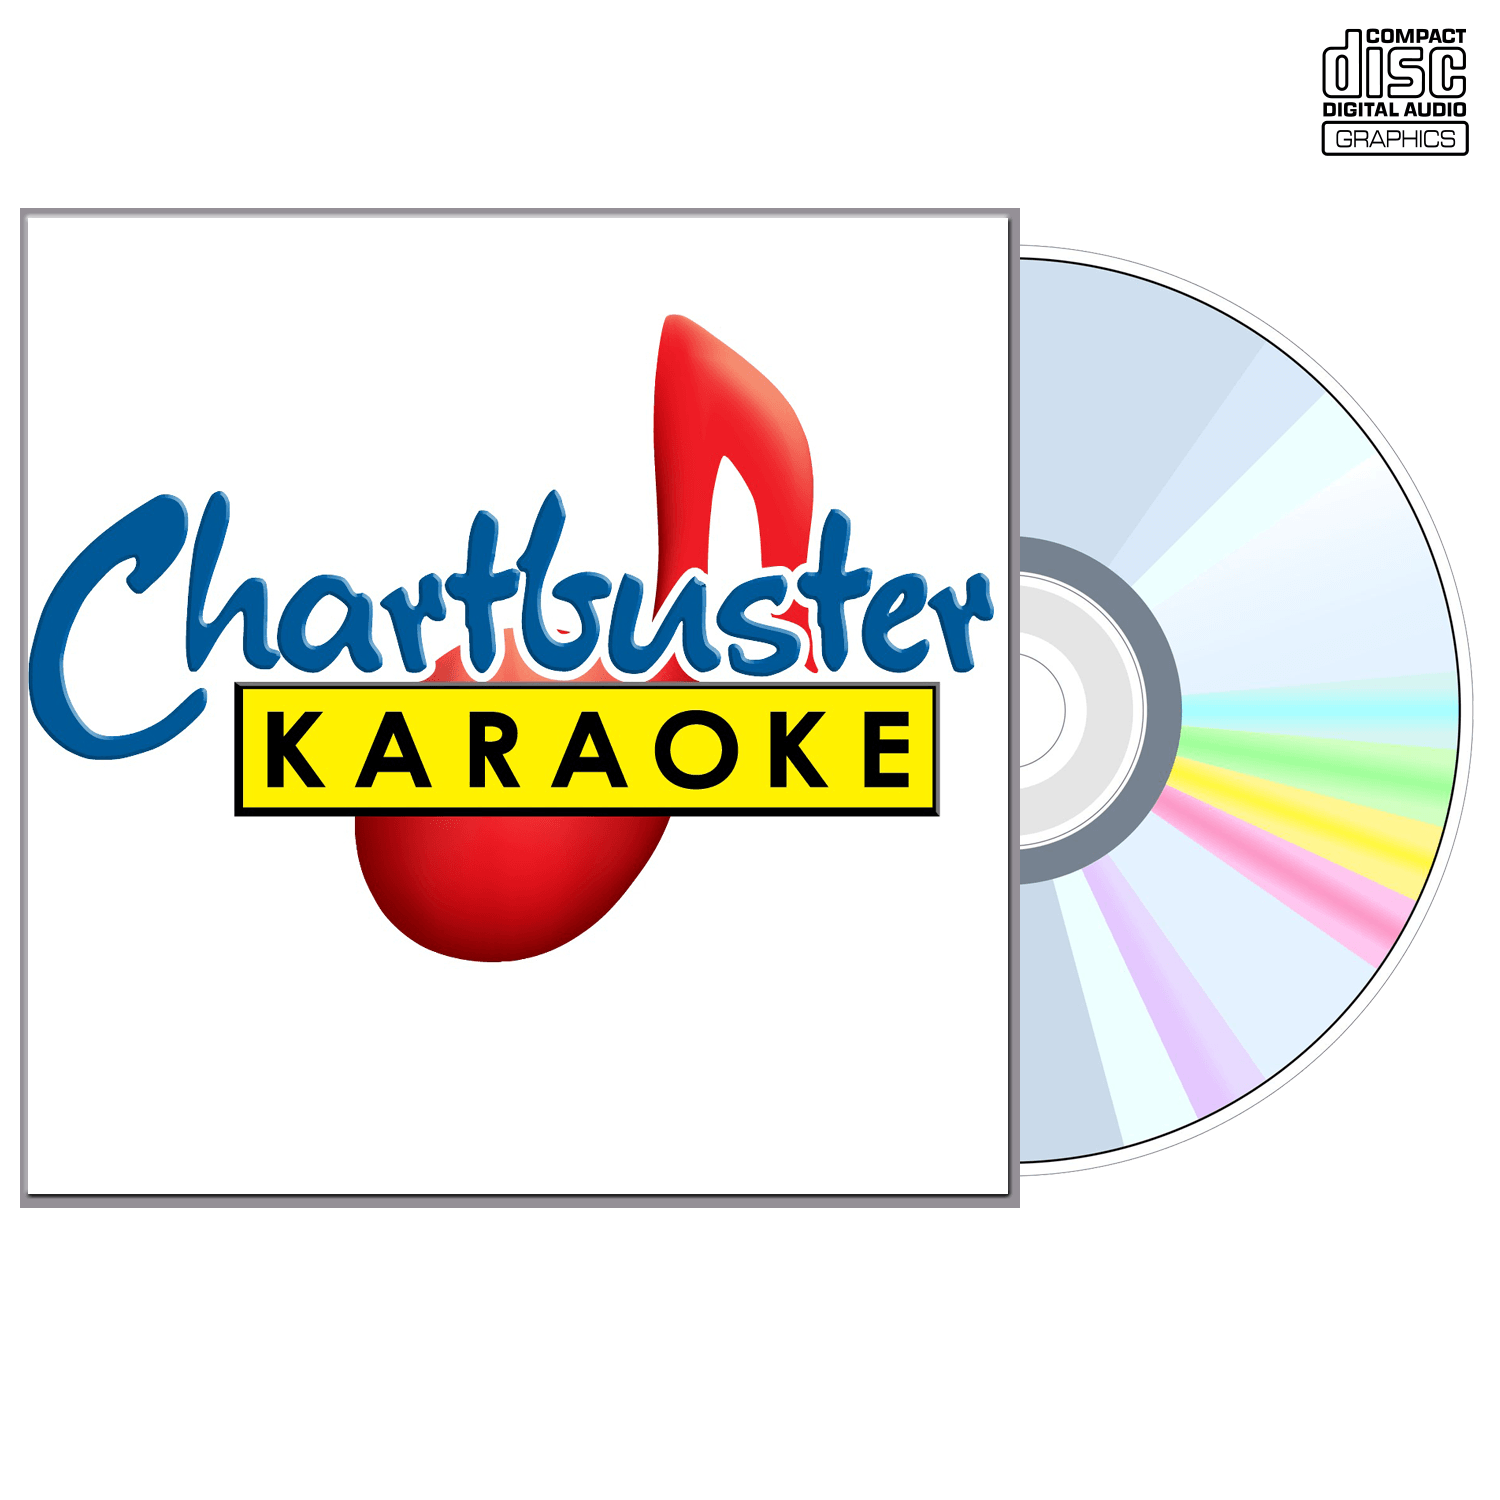 Bill Engvall - CD+G - Chartbuster Karaoke - Karaoke Home Entertainment